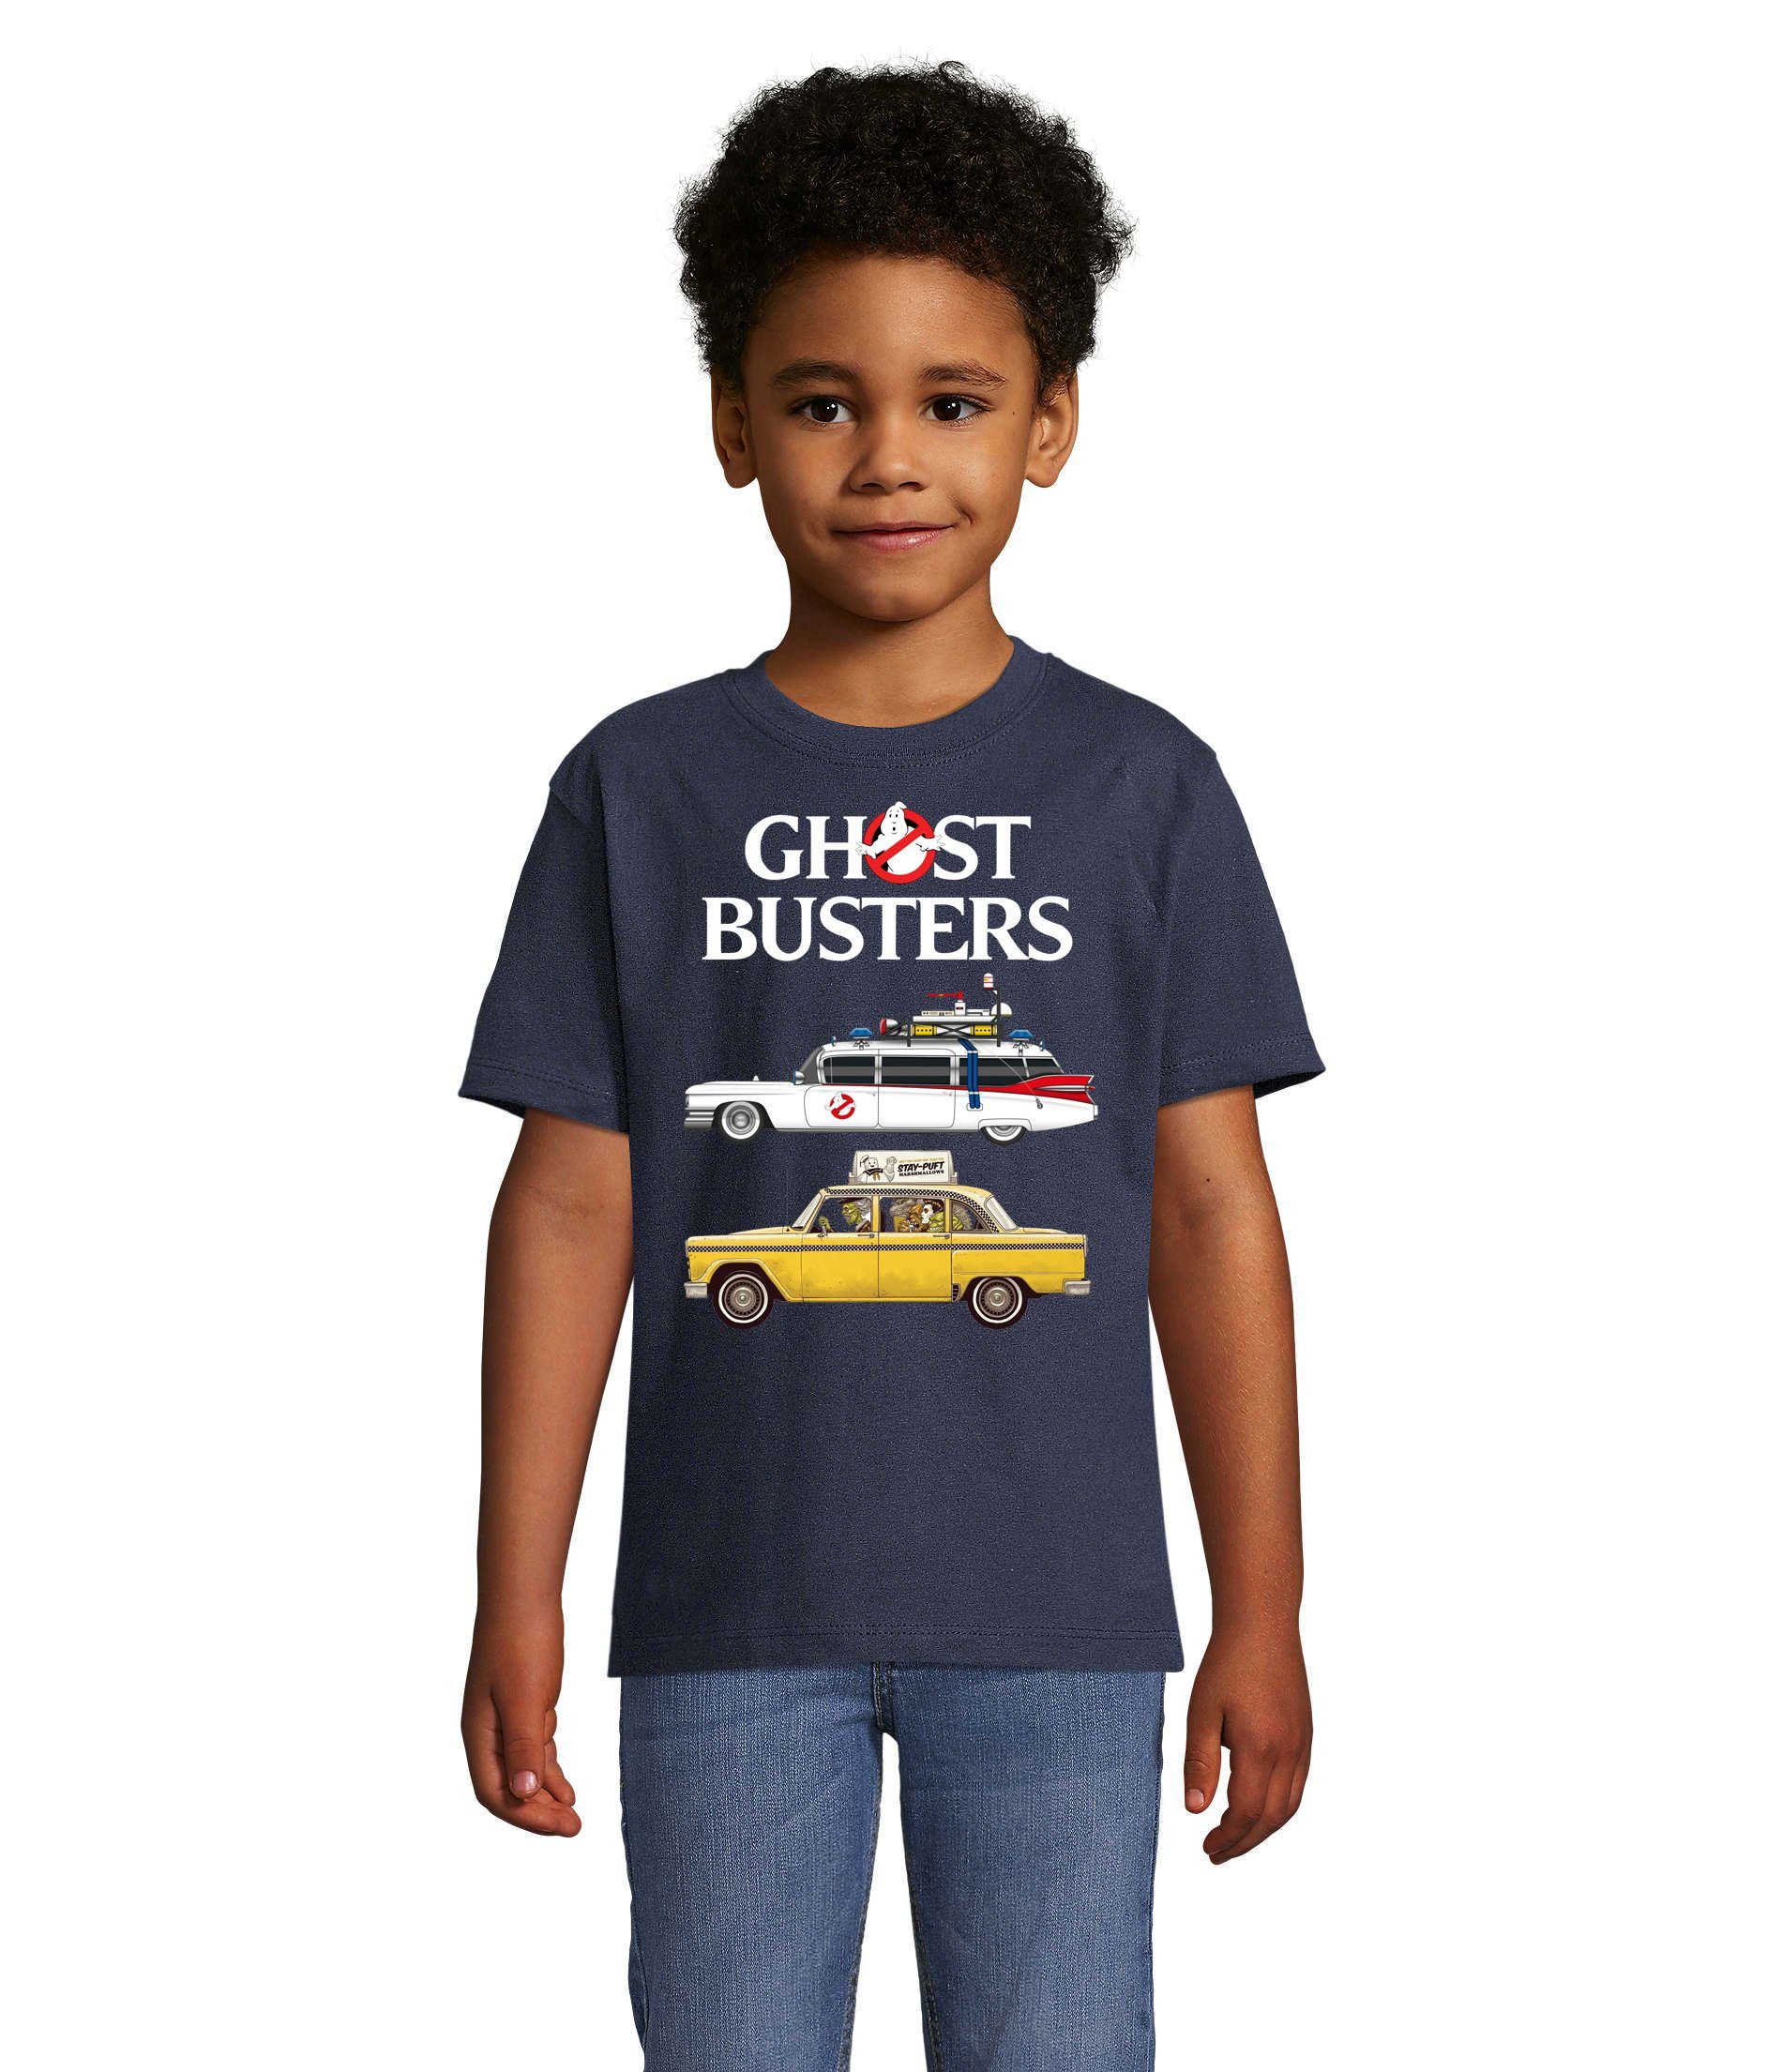 Blondie & Brownie T-Shirt Kinder Ghostbusters Cars Auto Geisterjäger Geister Film Ghost Navyblau